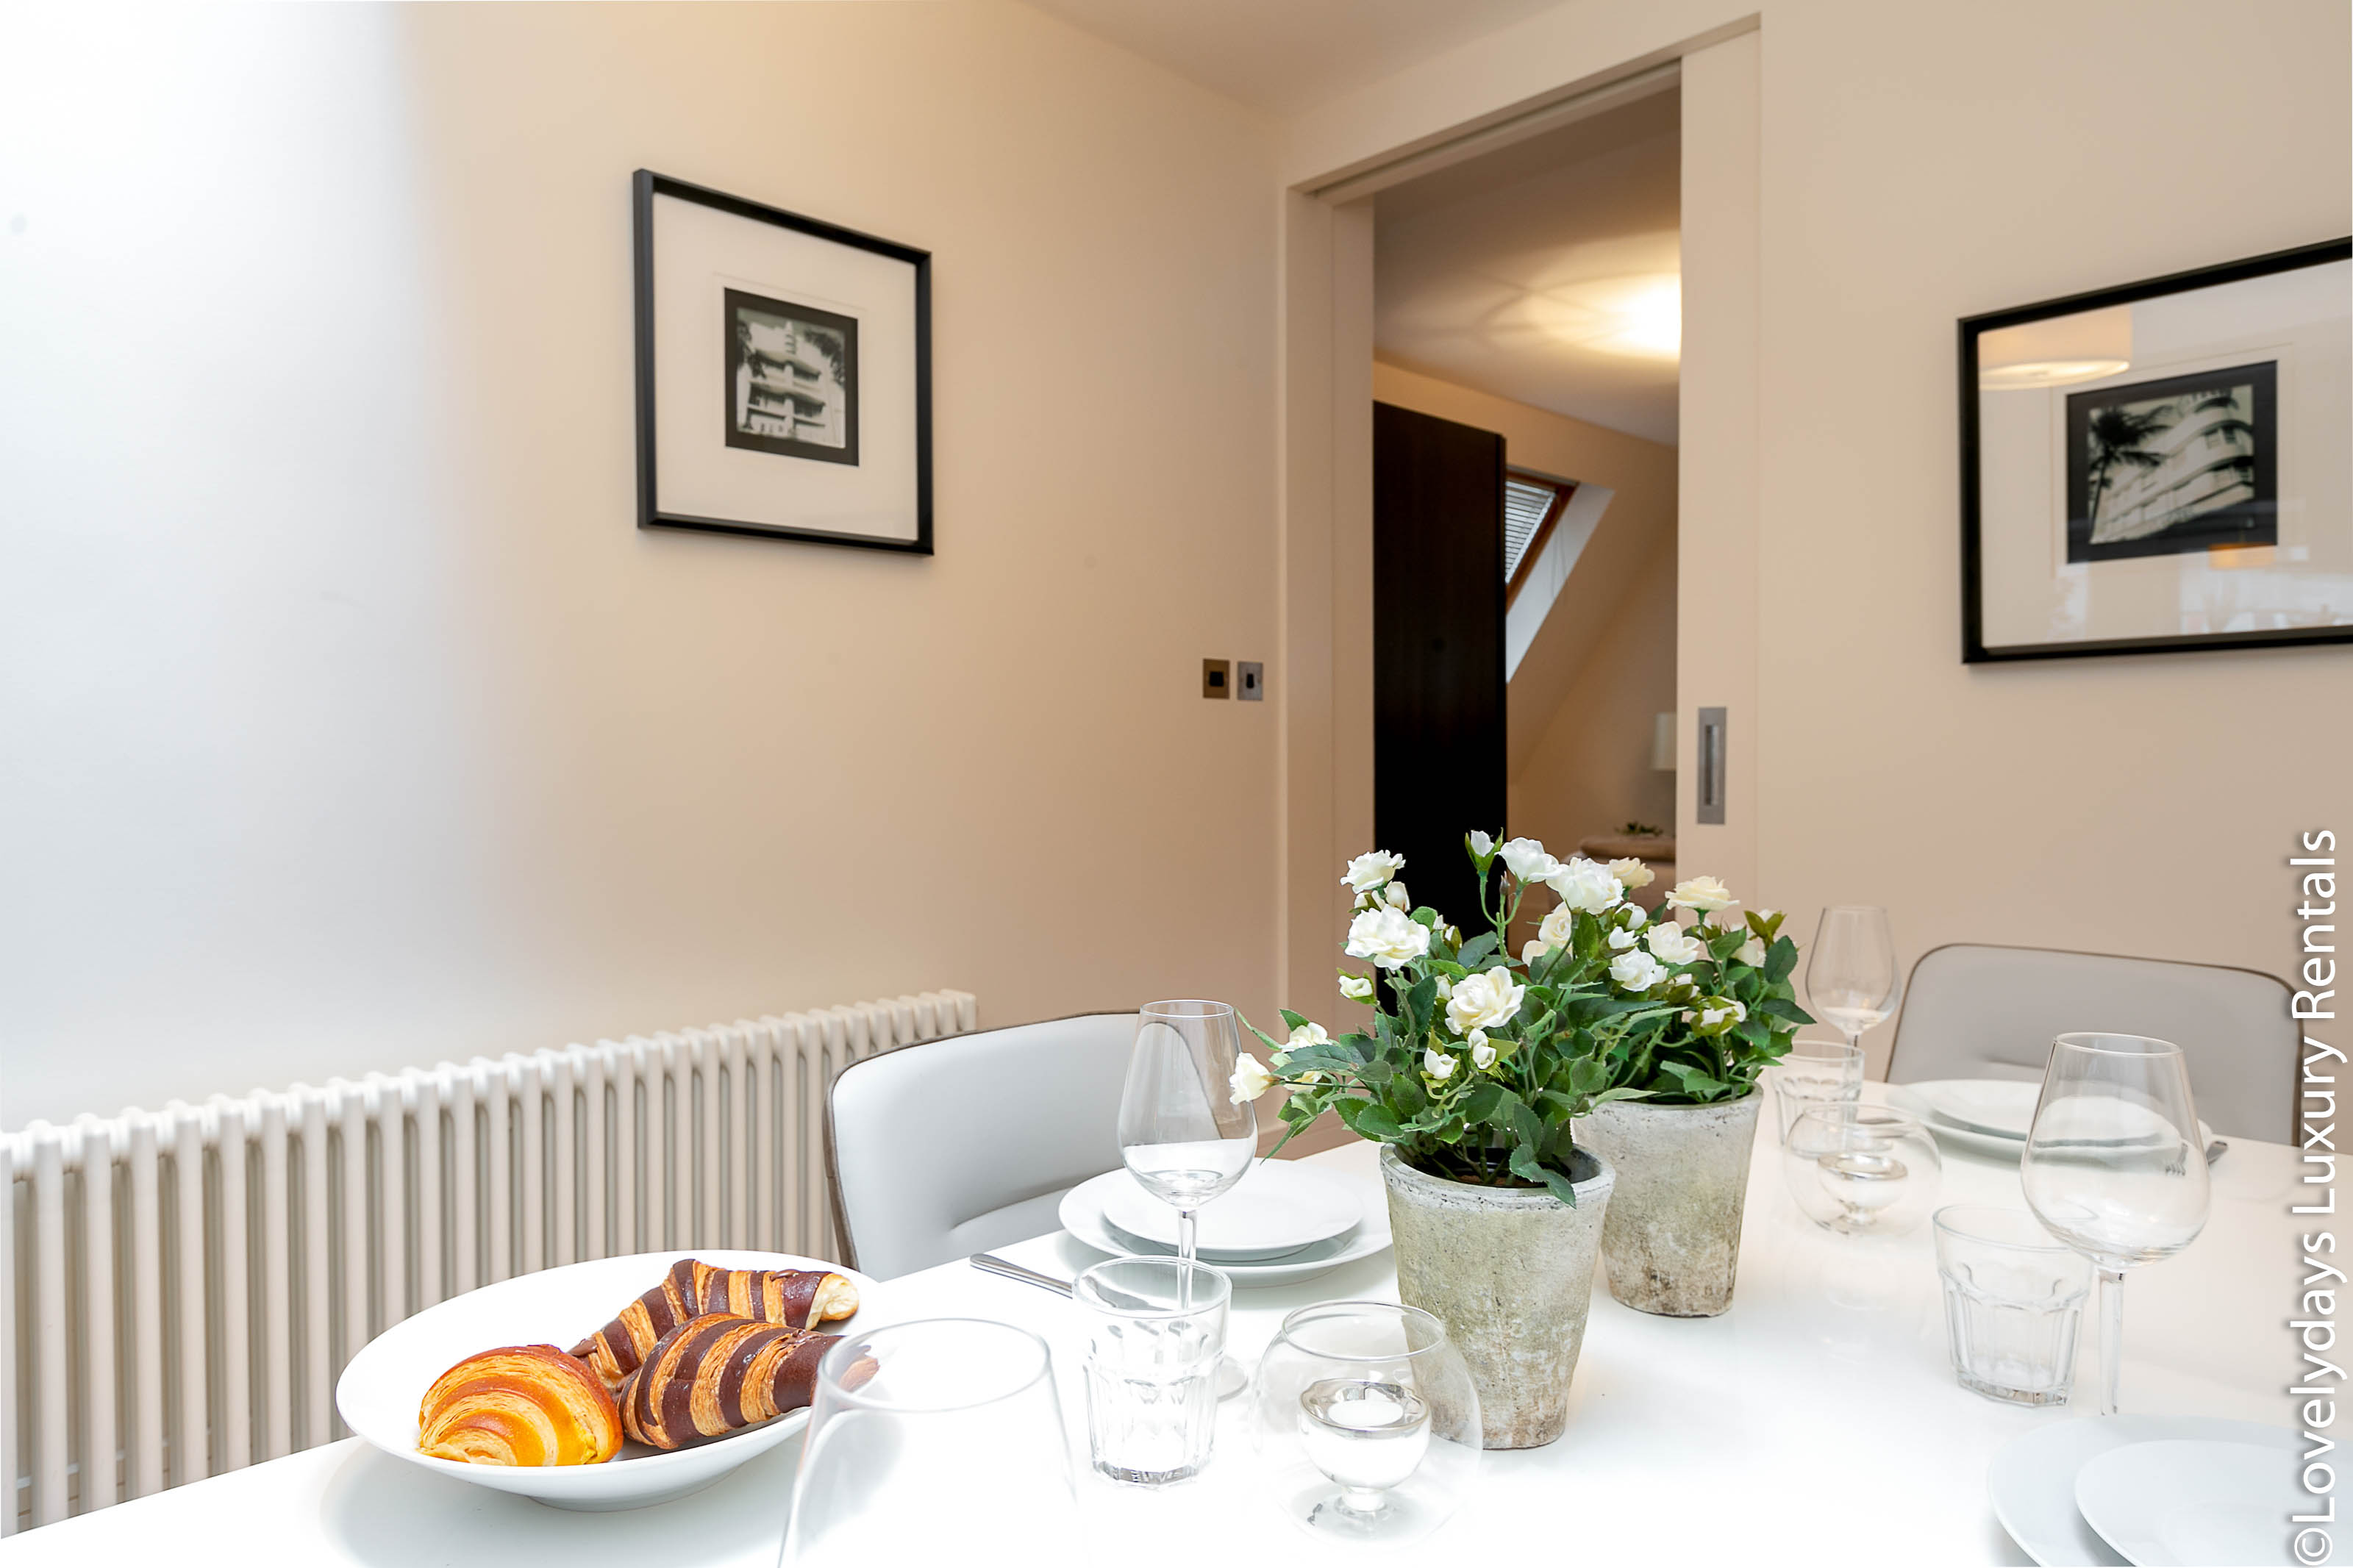 Lovelydays luxury service apartment rental - London - Soho - D'Arblay Street - Lovelysuite - 1 bedrooms - 1 bathrooms - Professional kitchen - london serviced apartment - 079765765973 - Lovelydays